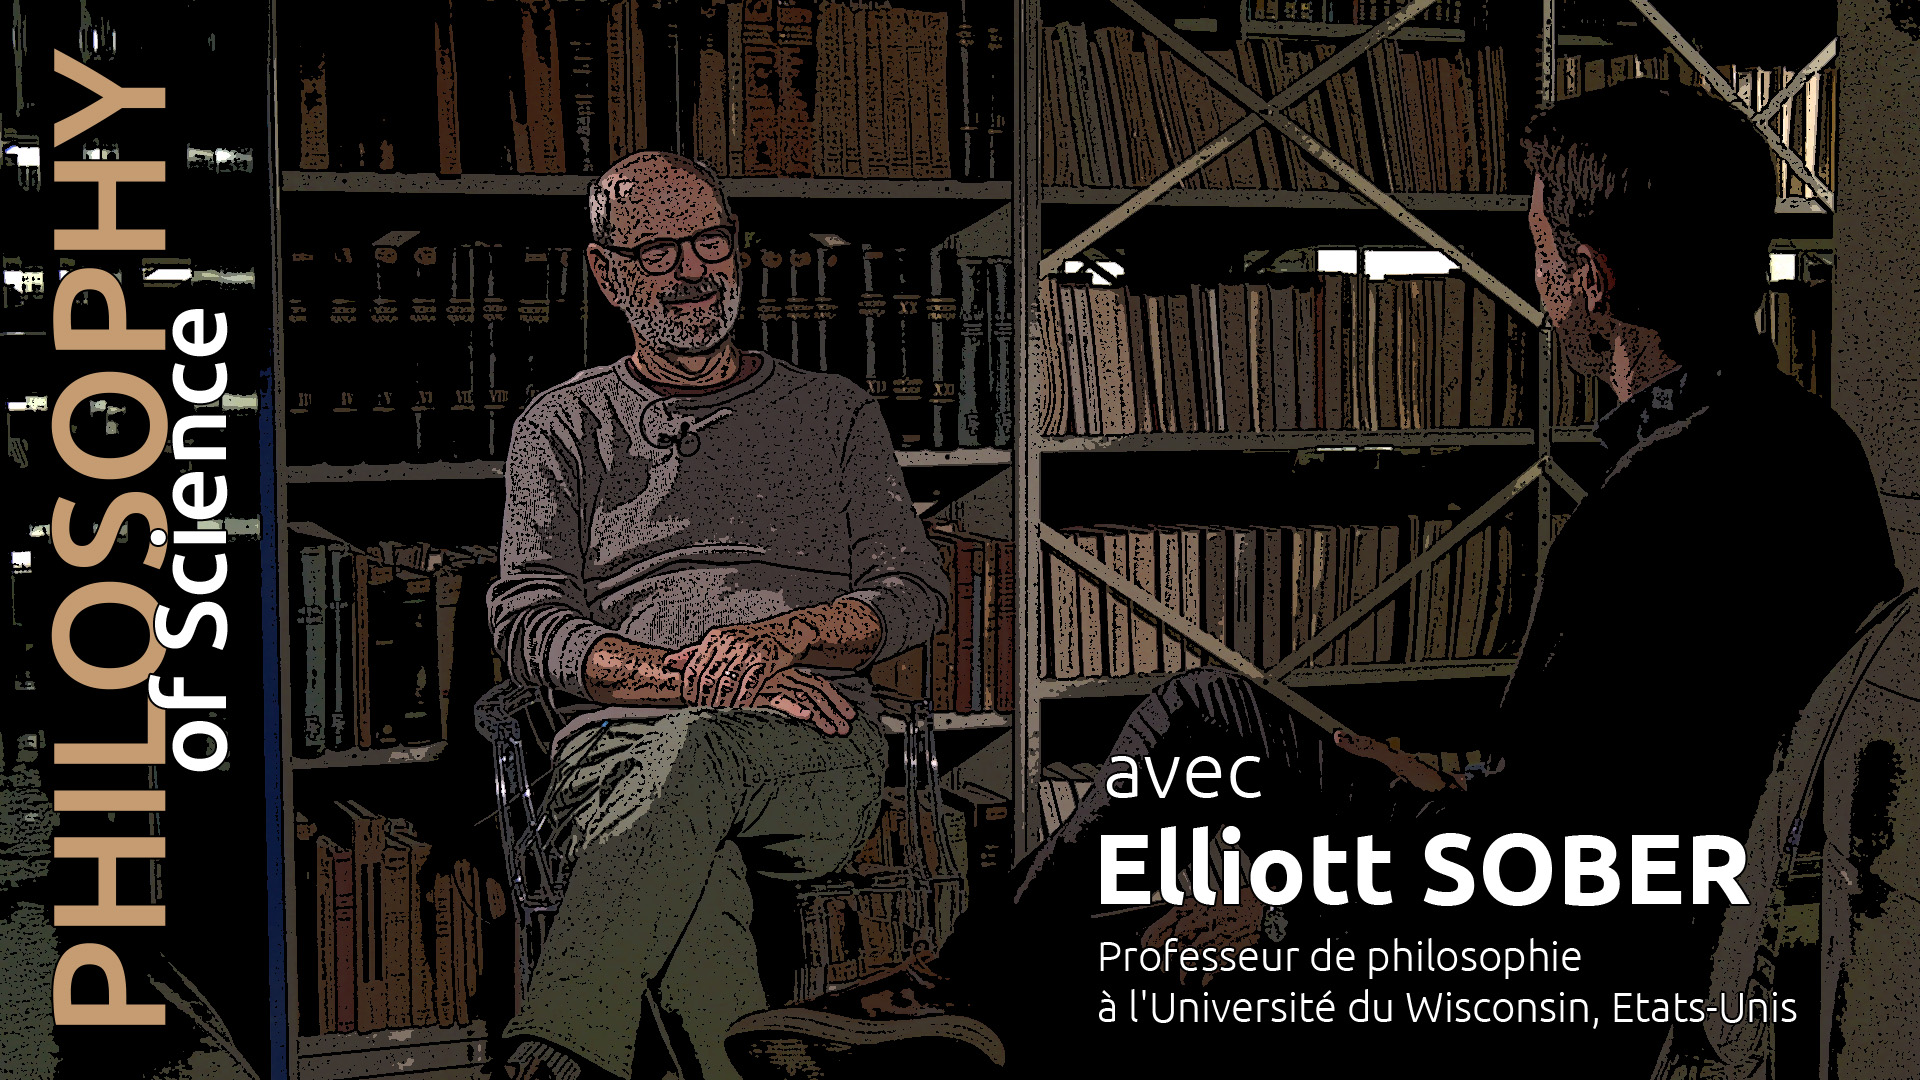 Philosophy of Science / Elliott Sober